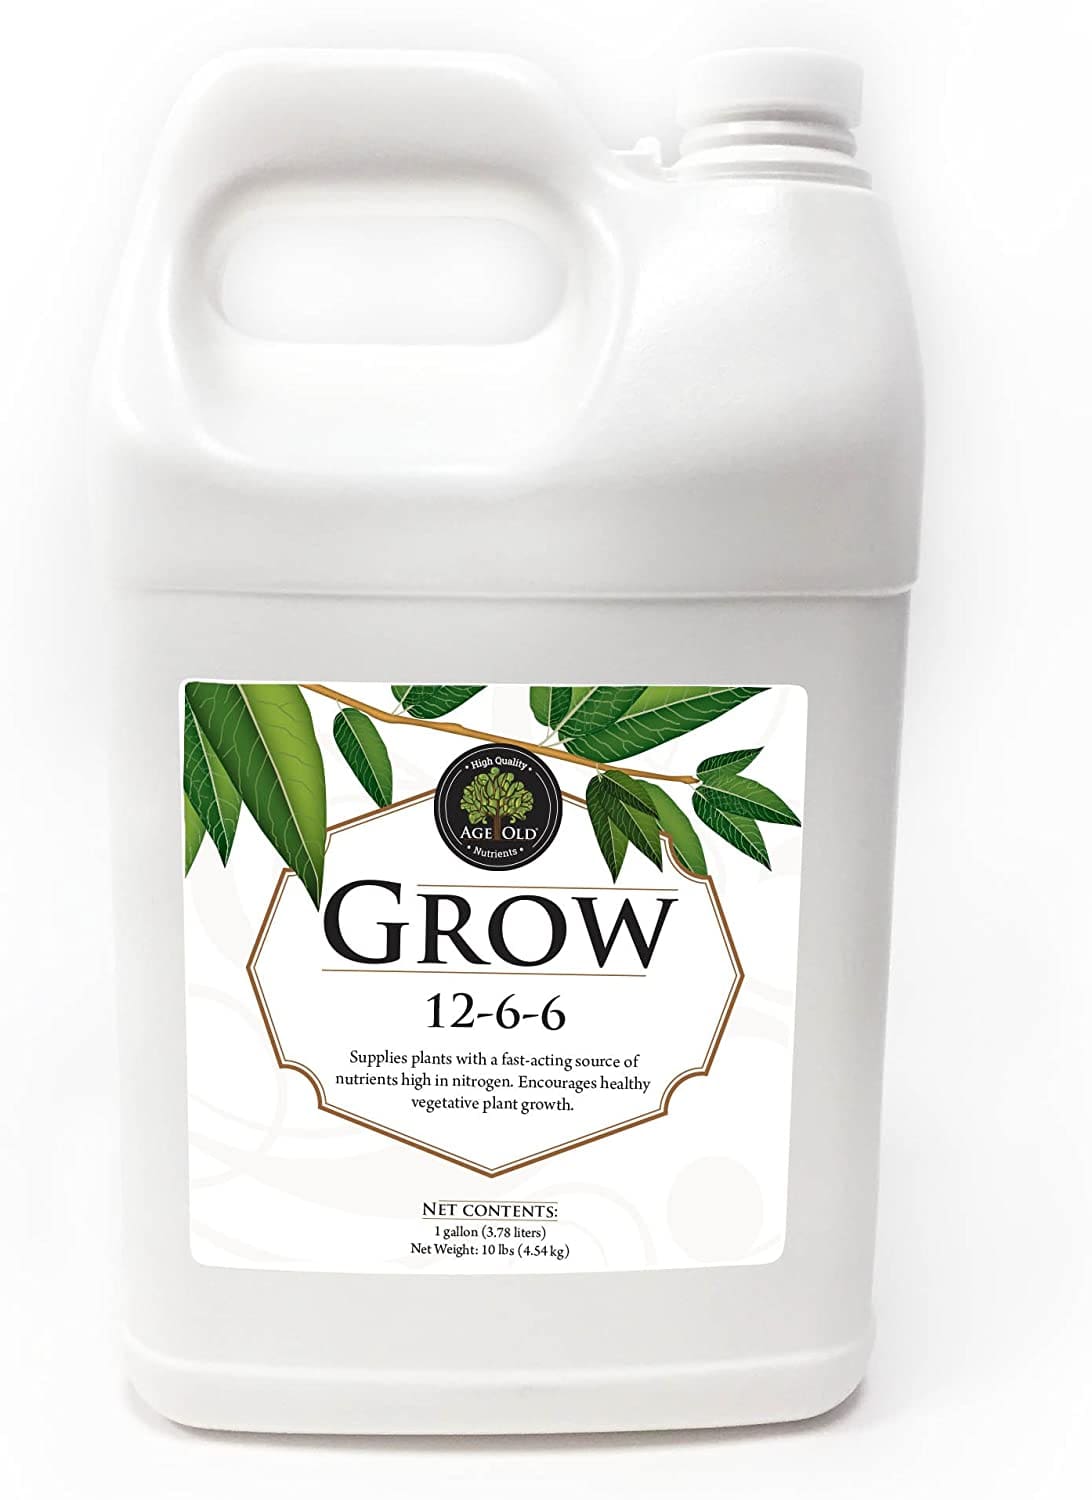 Age Old Grow Natural Based Liquid Fertilizer, 2.5-Gallon